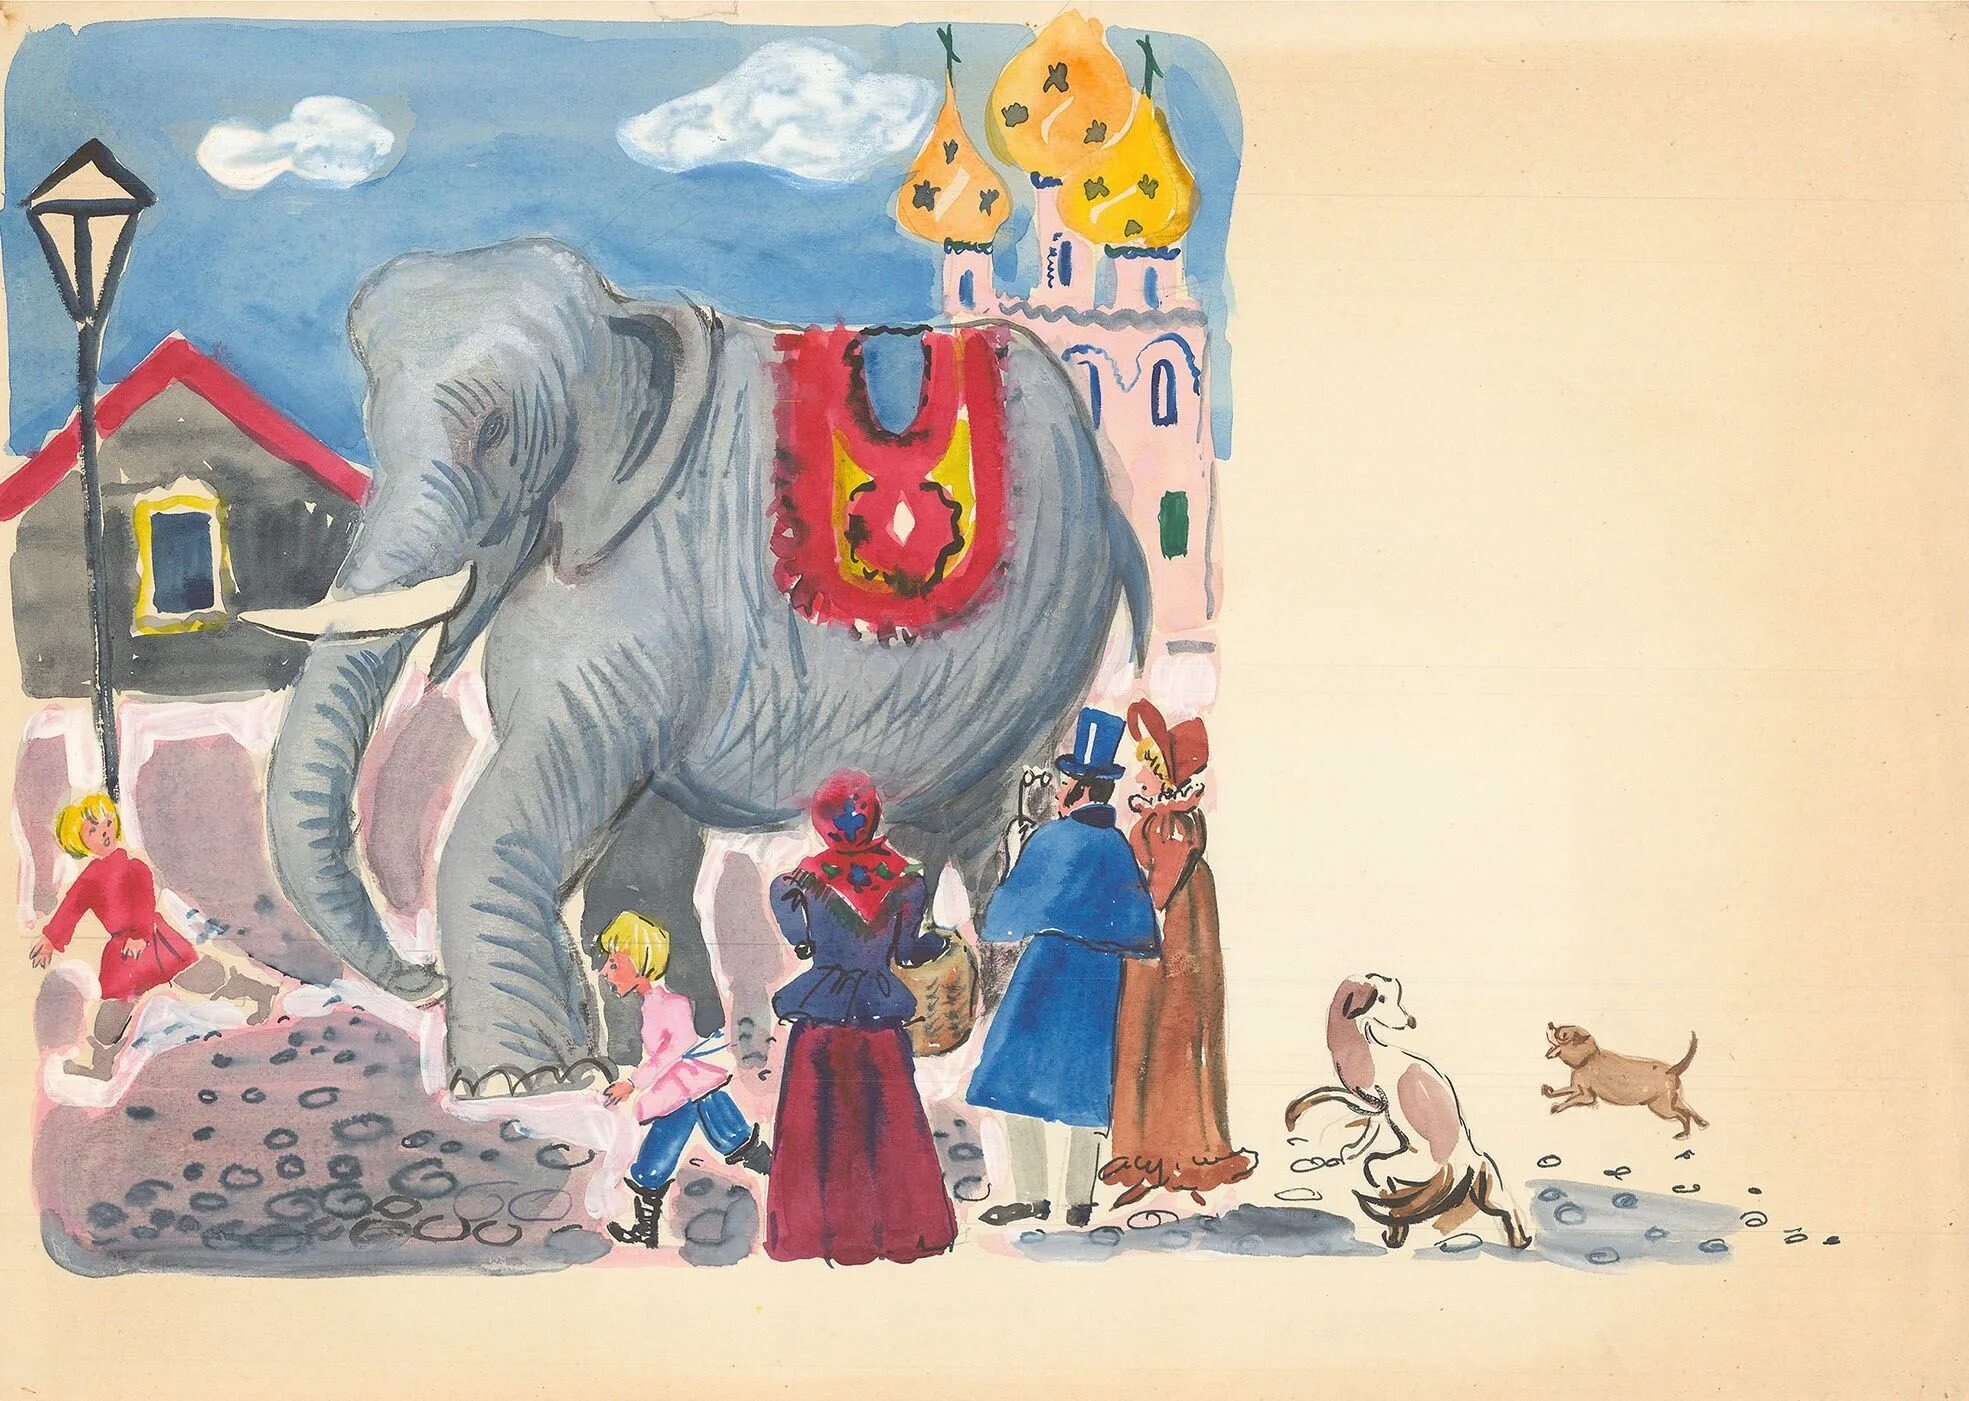 Моська из басни крылова. Басня слон и моська Крылов. Иллюстрация к басне слон и моська. Рисунок к басне Крылова слон и моська.